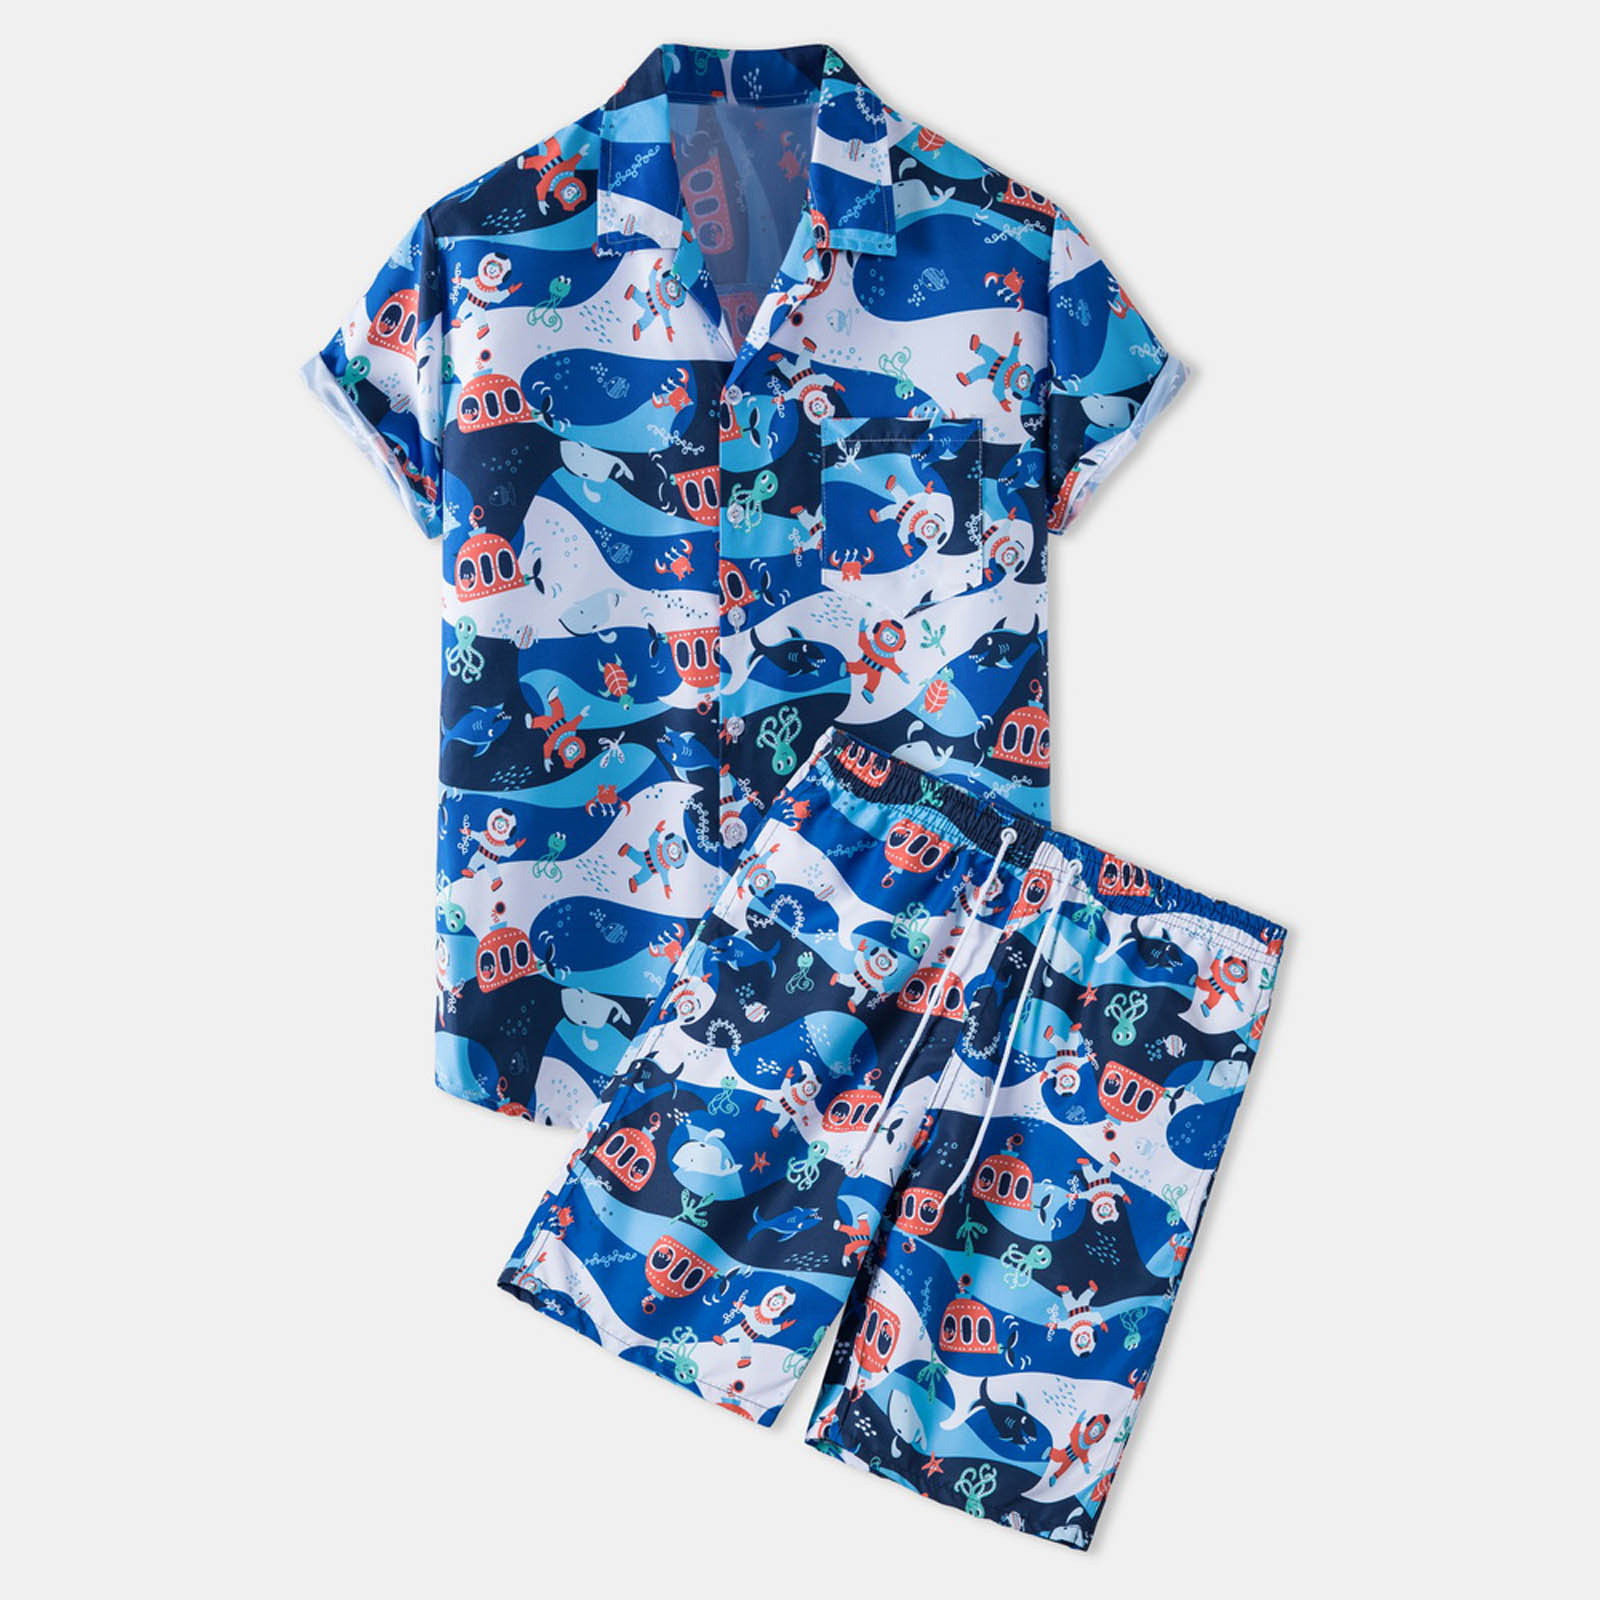 Short sleeve shirt beach pants set卡通印花短袖衬衫沙滩裤套装